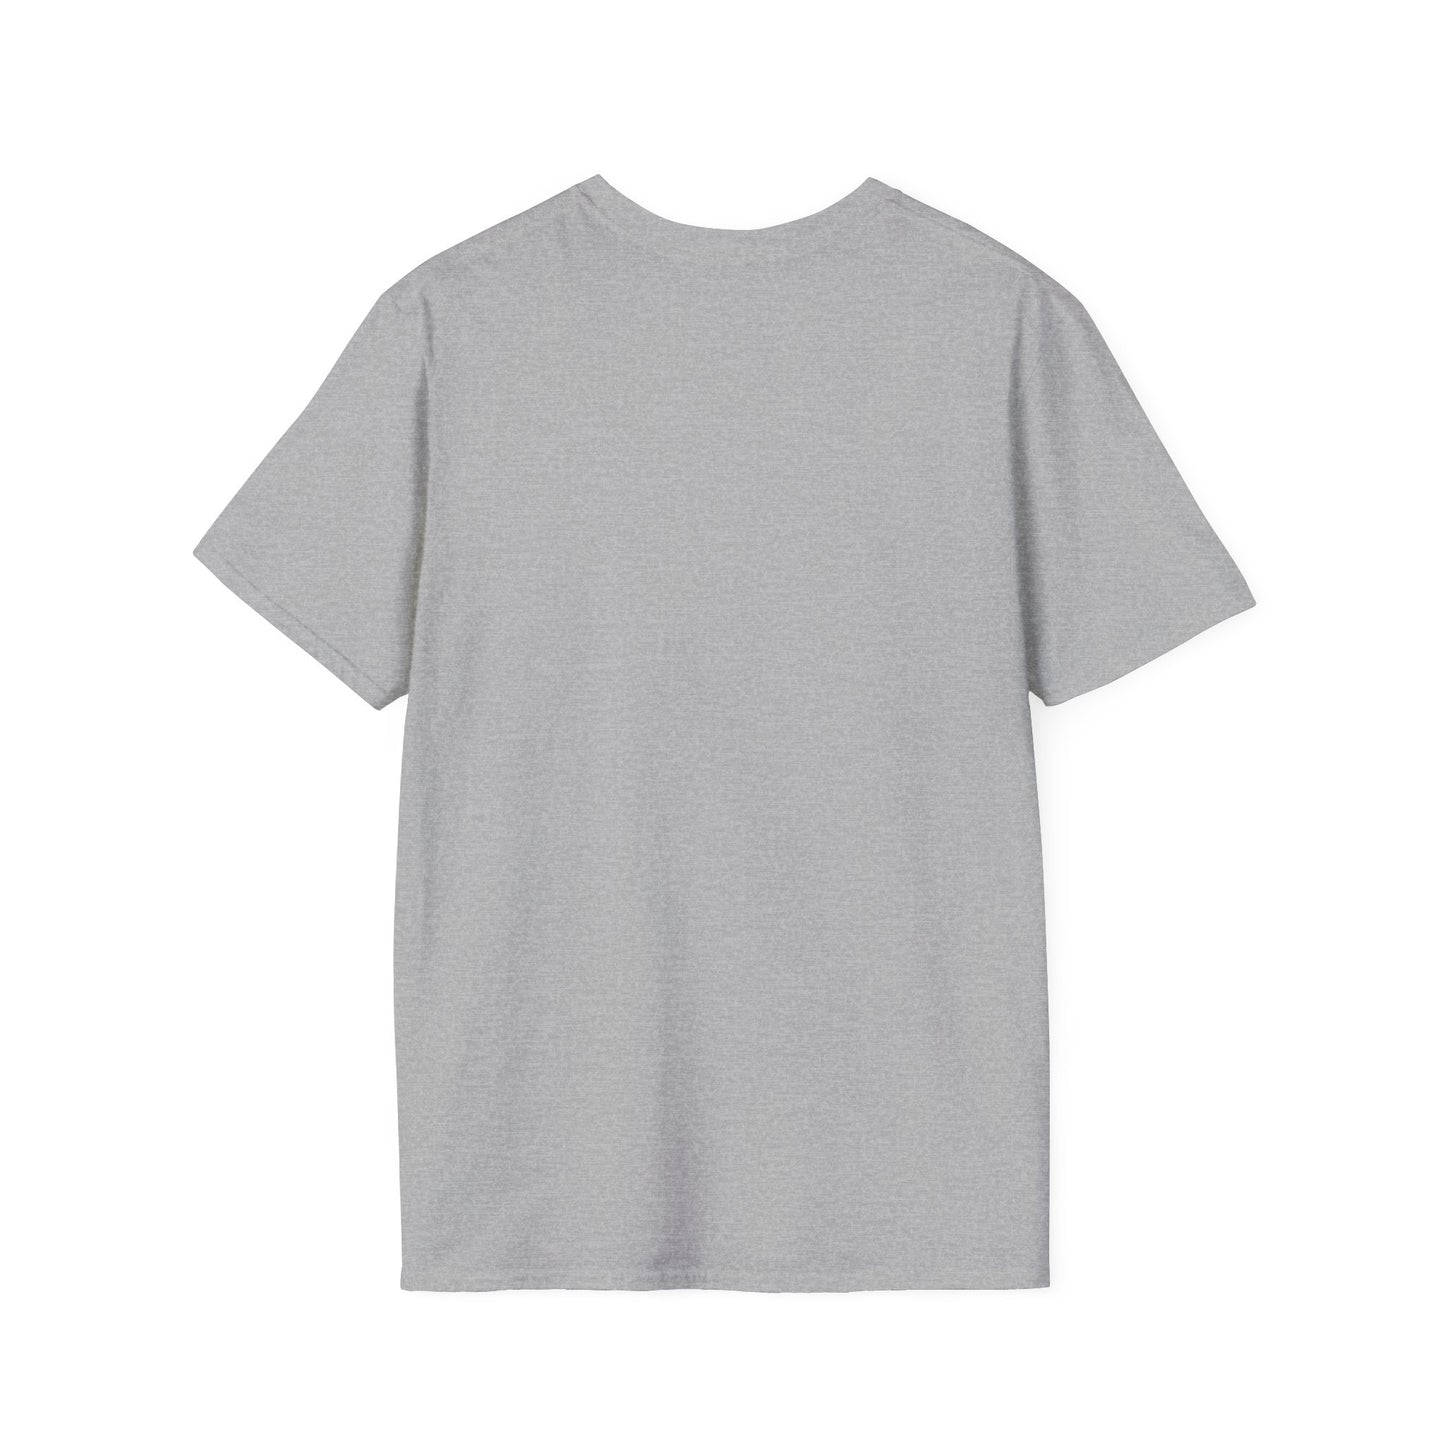 Unisex Softstyle T-Shirt - Good luck